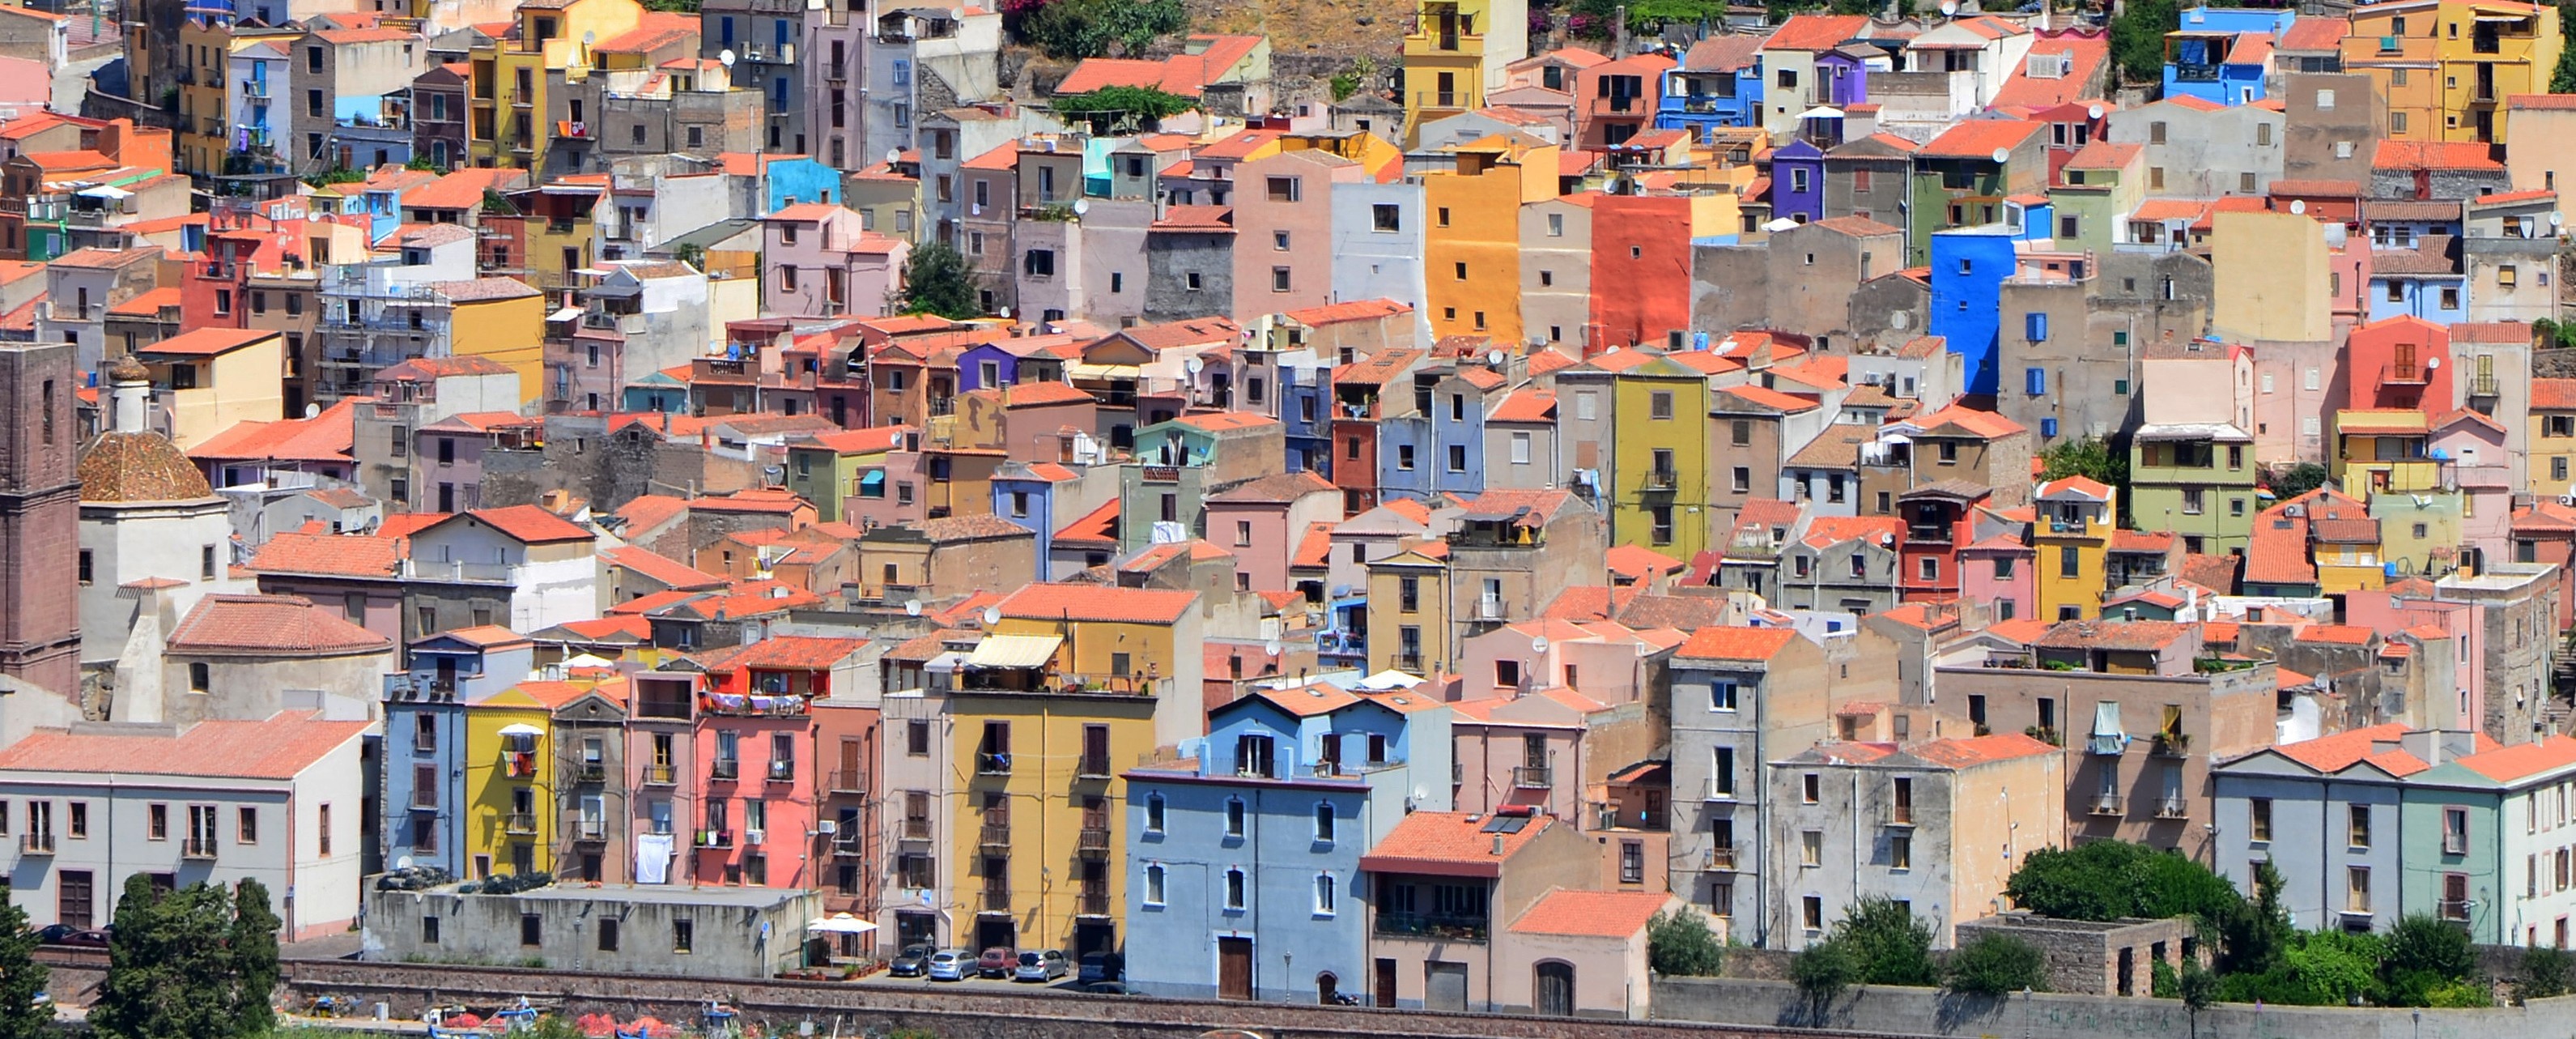 Bosa, Alghero's neighbor, Coastal beauty, Sardinian gems, 3190x1290 Dual Screen Desktop